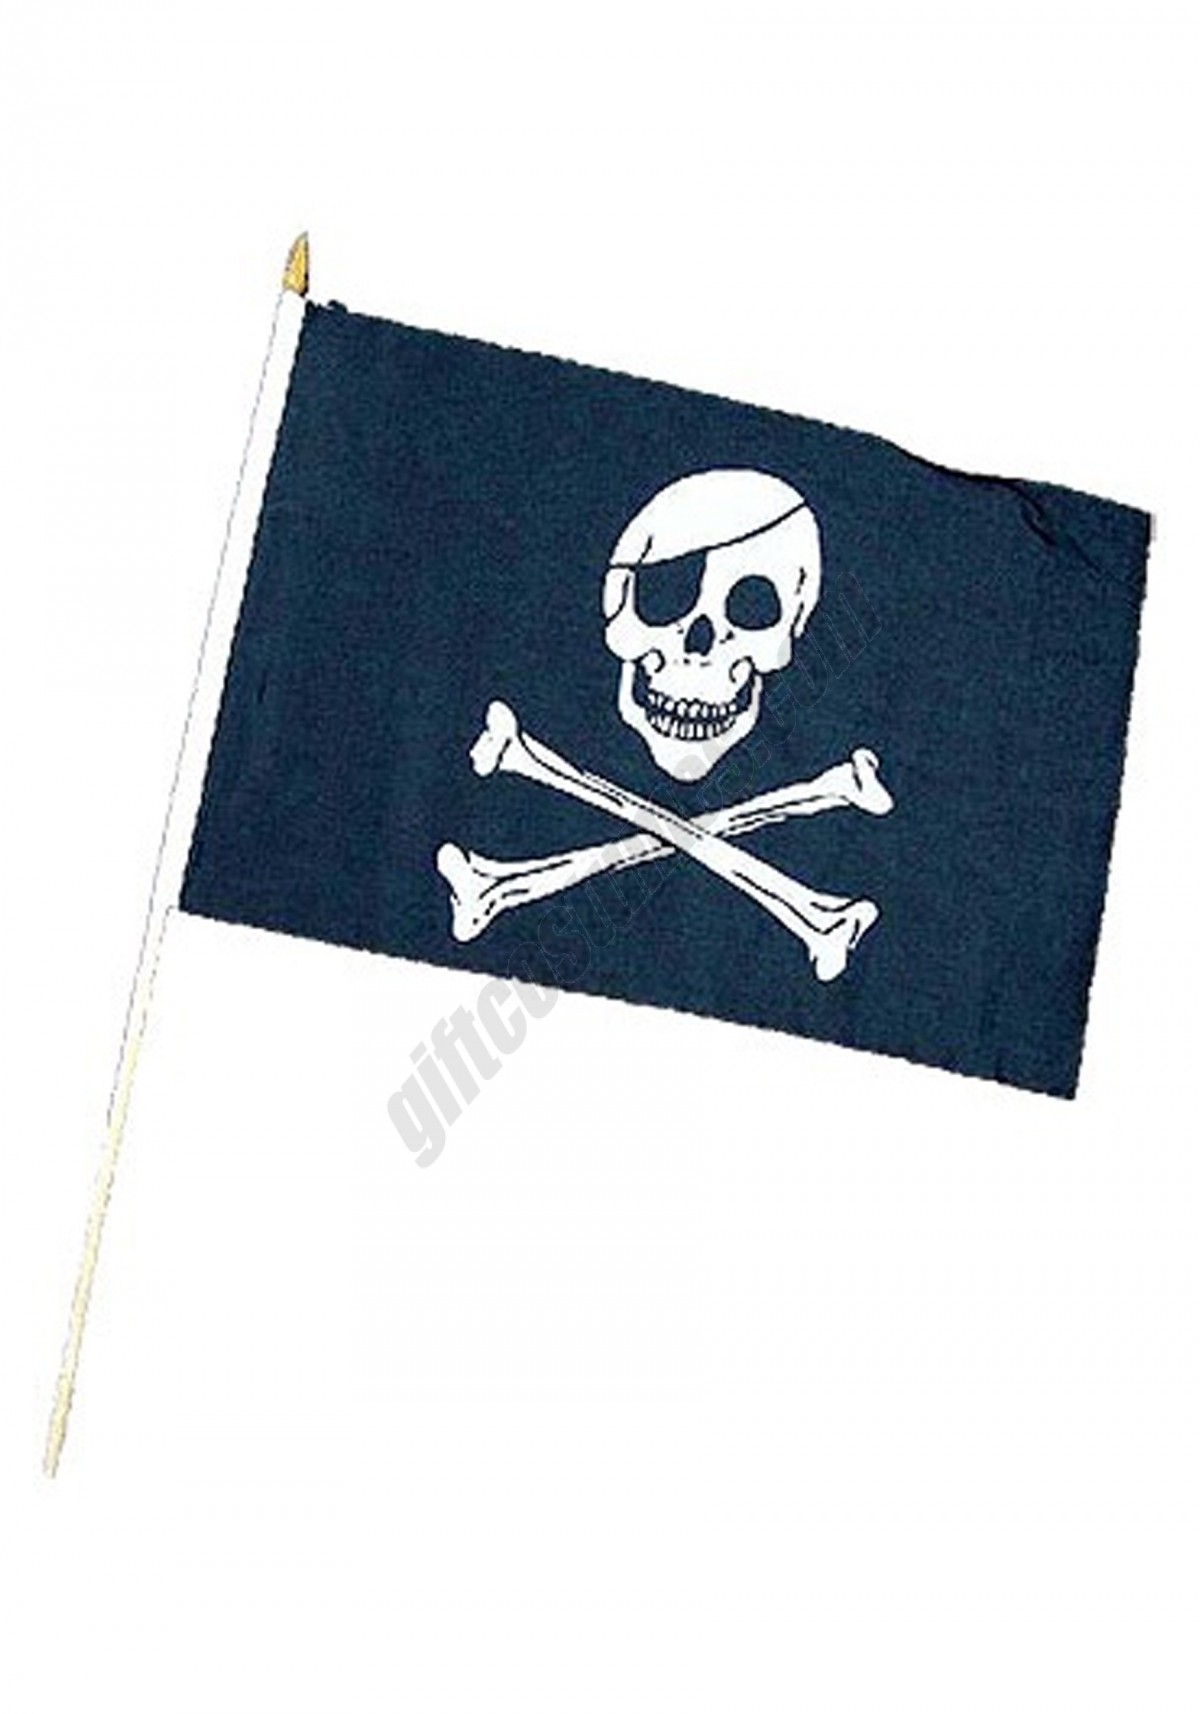 Skull & Crossbones Pirate Flag Promotions - -0